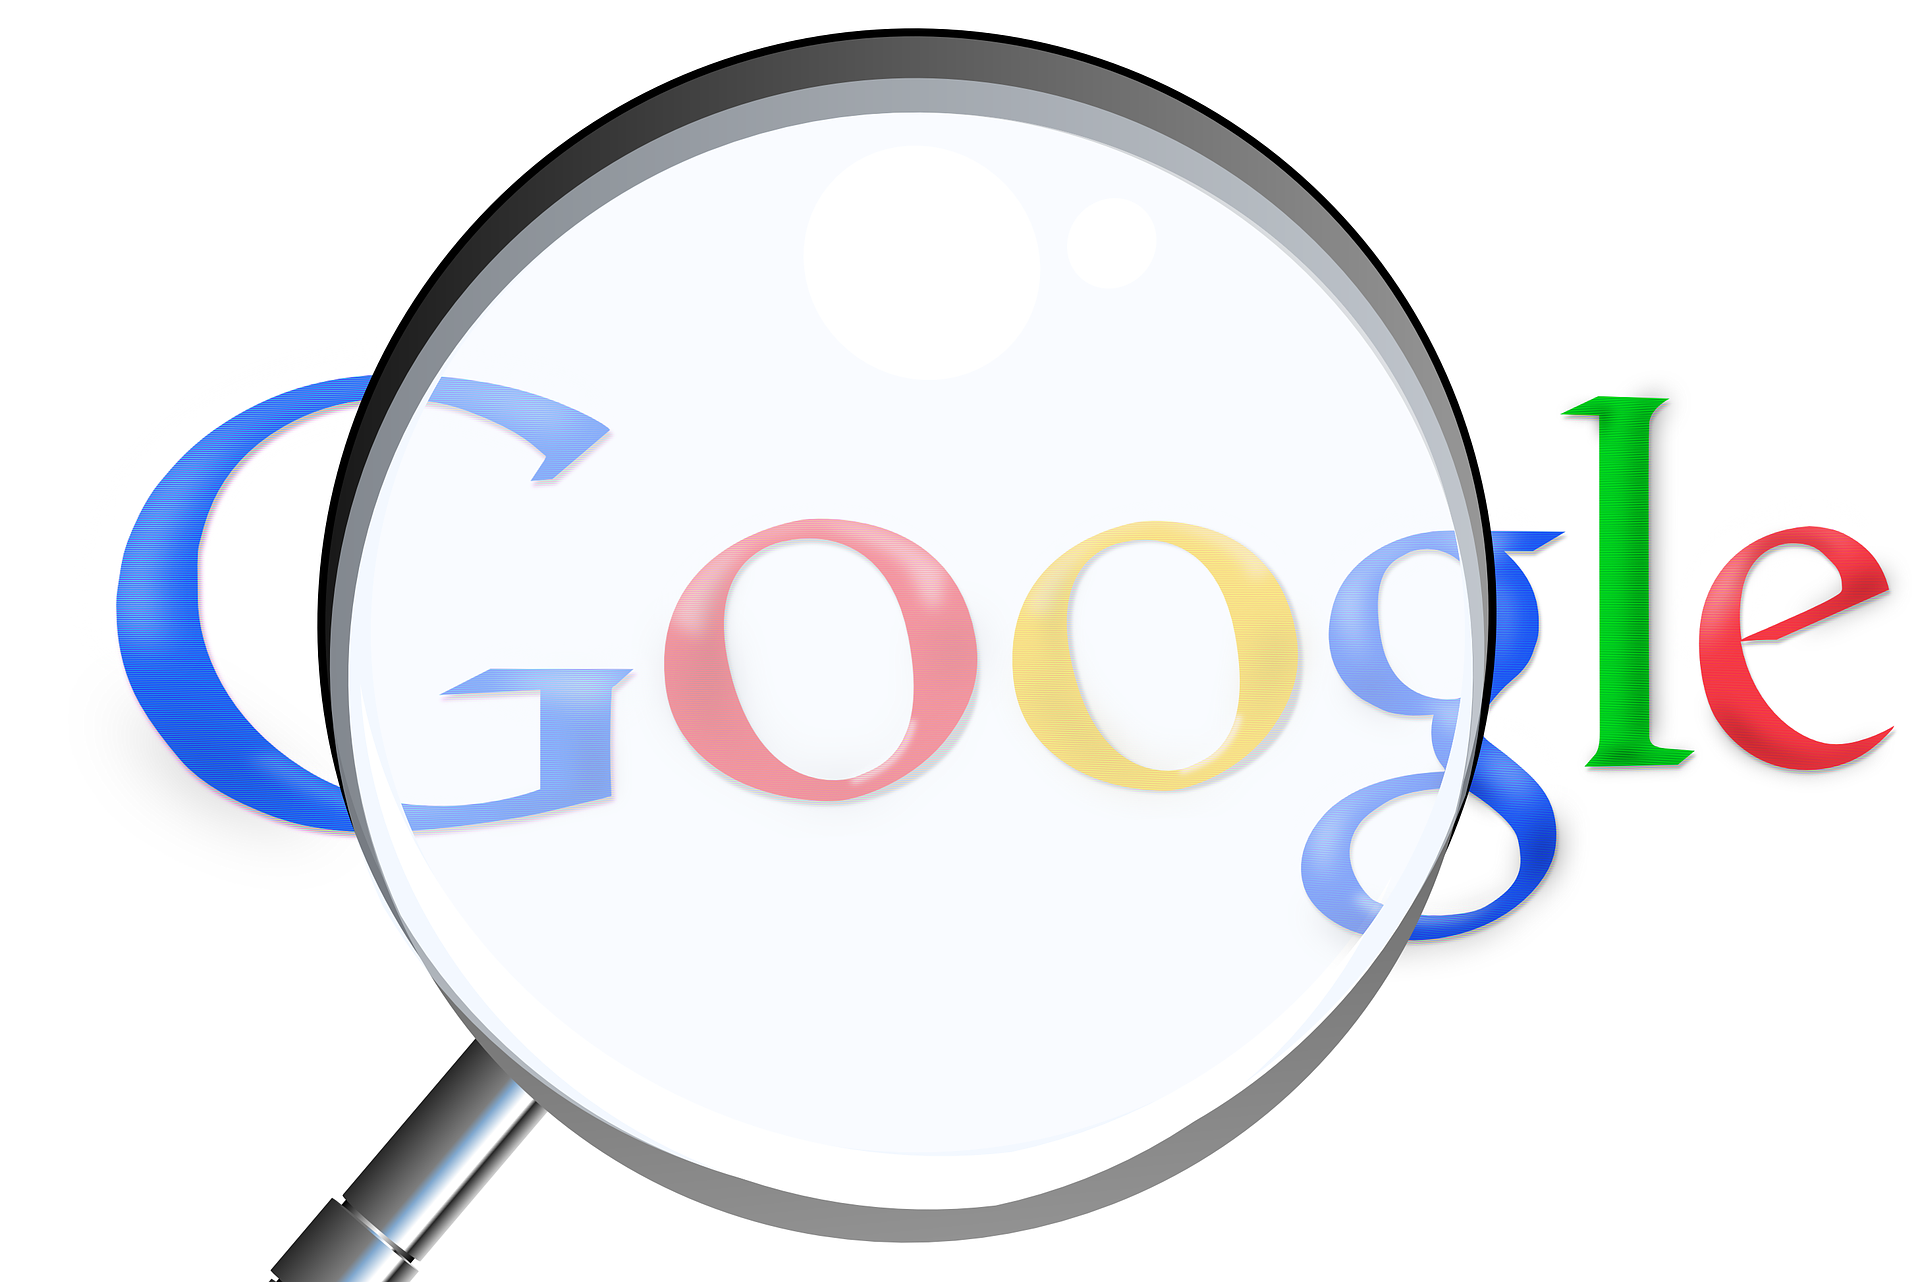 Googleのロゴと虫眼鏡